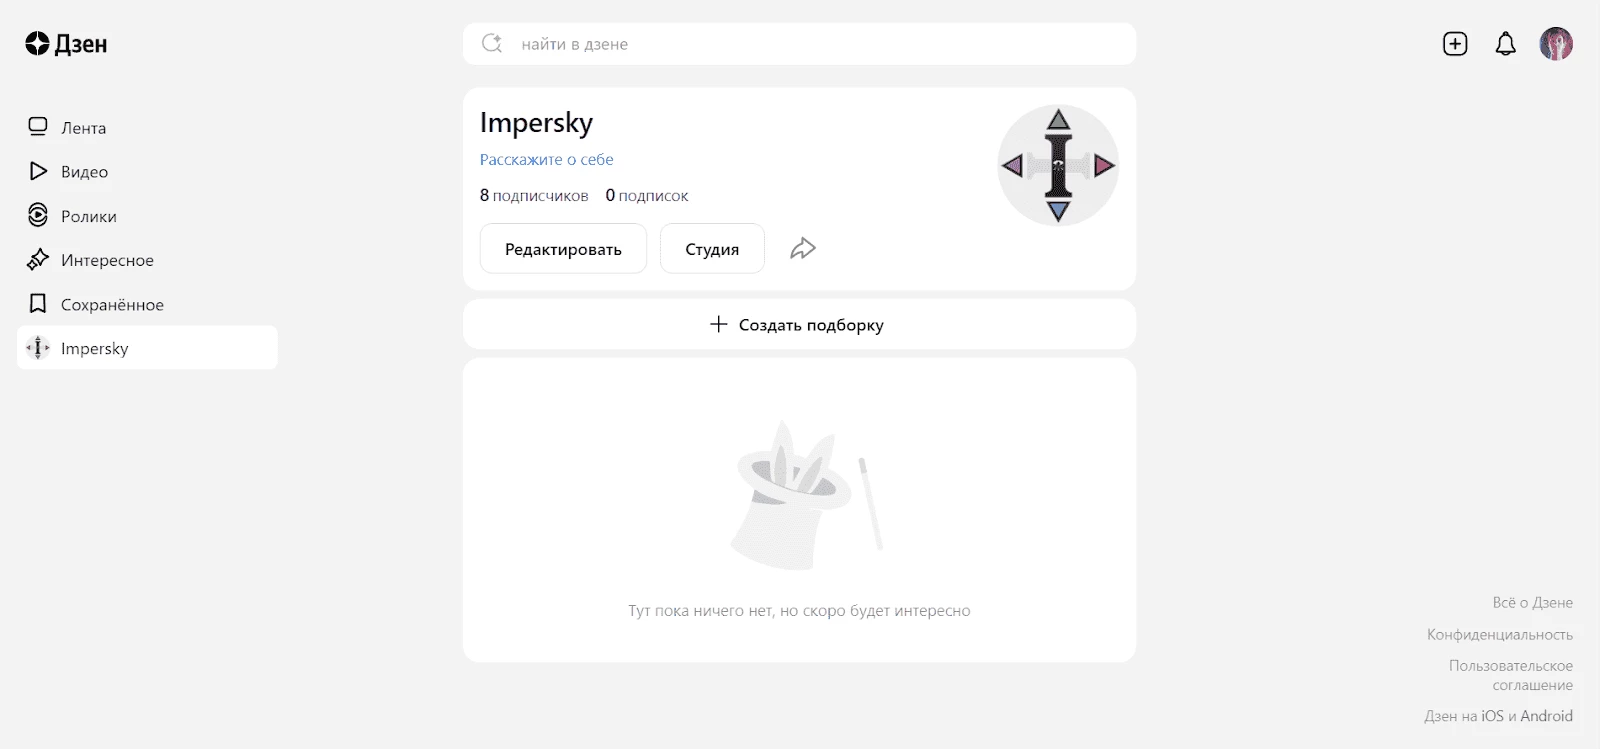 Яндекс.Дзен  - платформа для онлайн заработка с телефона без вложений